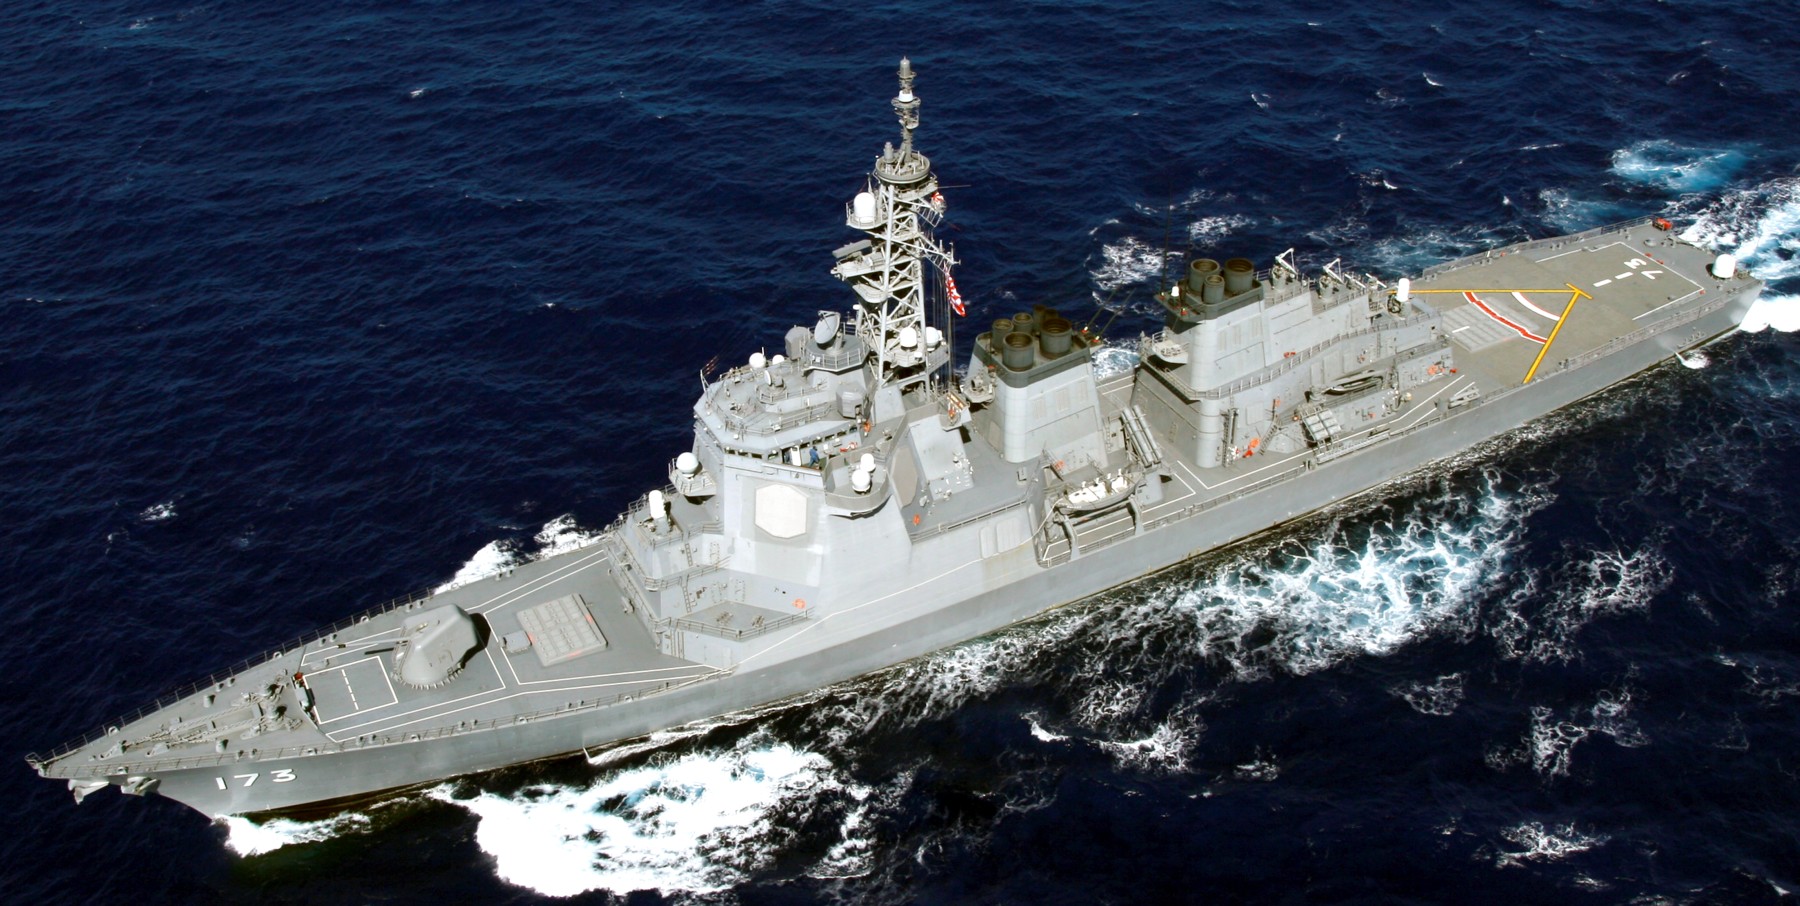 ddg-173 js kongo class guided missile destroyer aegis japan maritime self defense force jmsdf 18